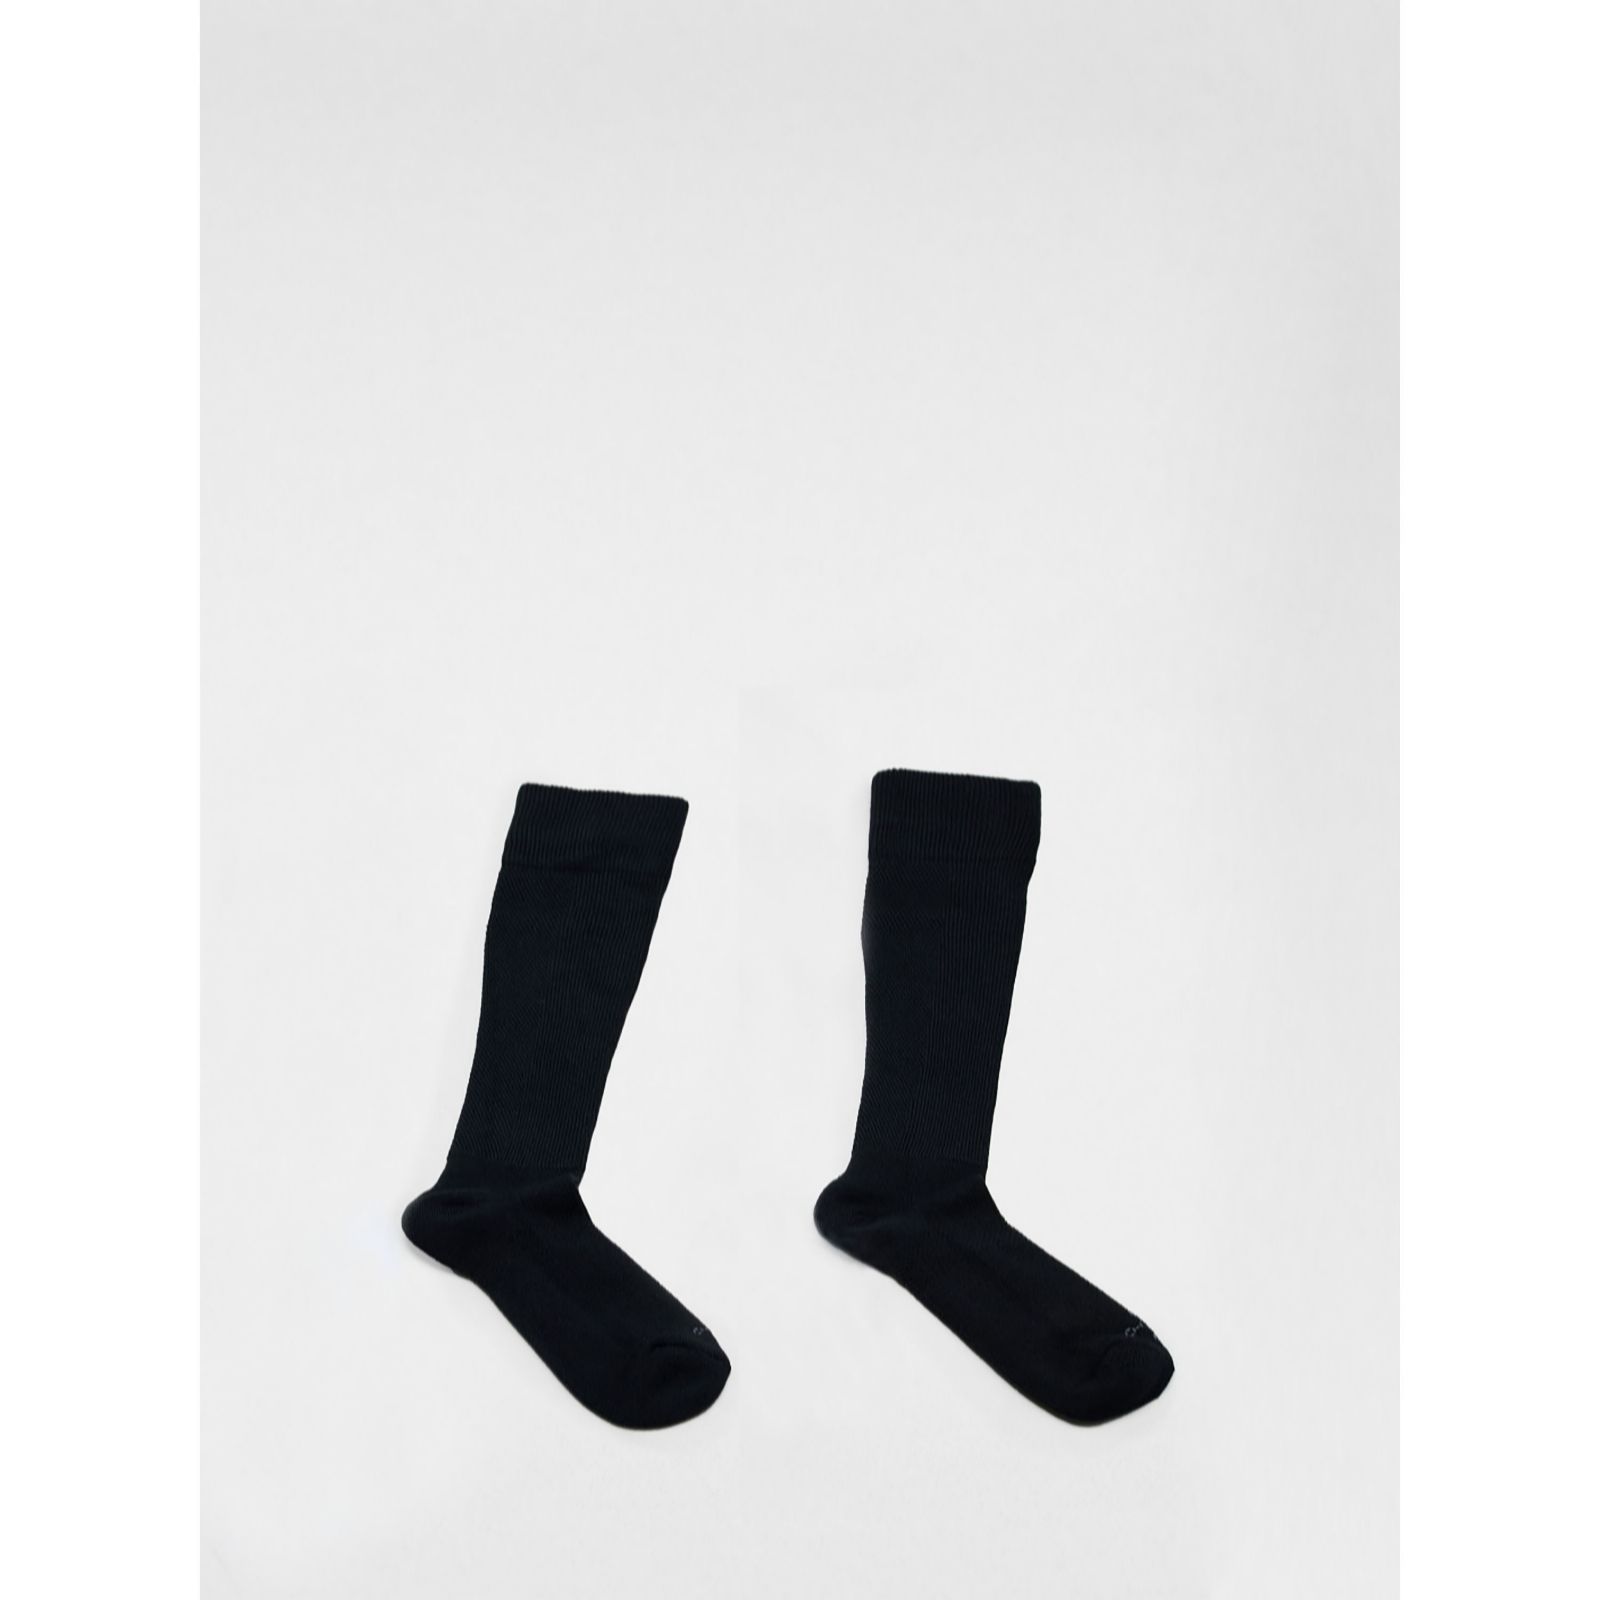 Tommie Copper Black Compression Socks 2 Pairs Size L/XL